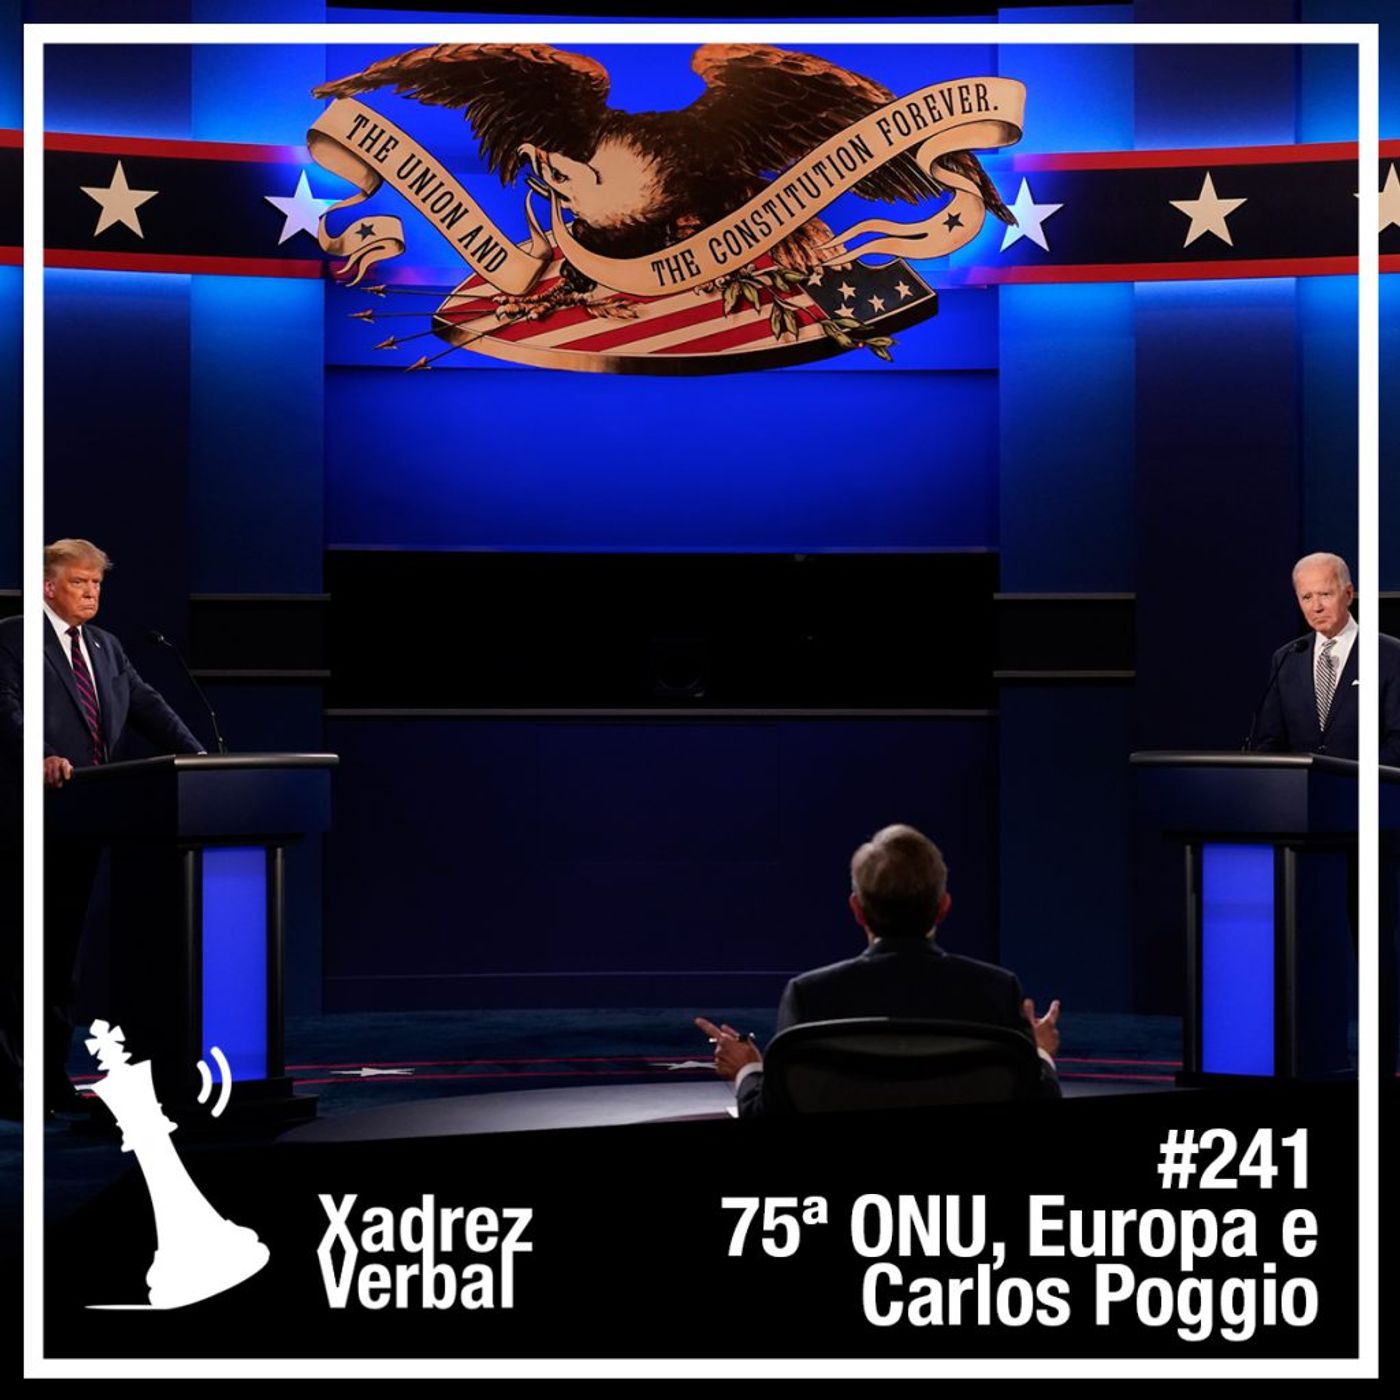 Xadrez Verbal #241 Debate do Debate